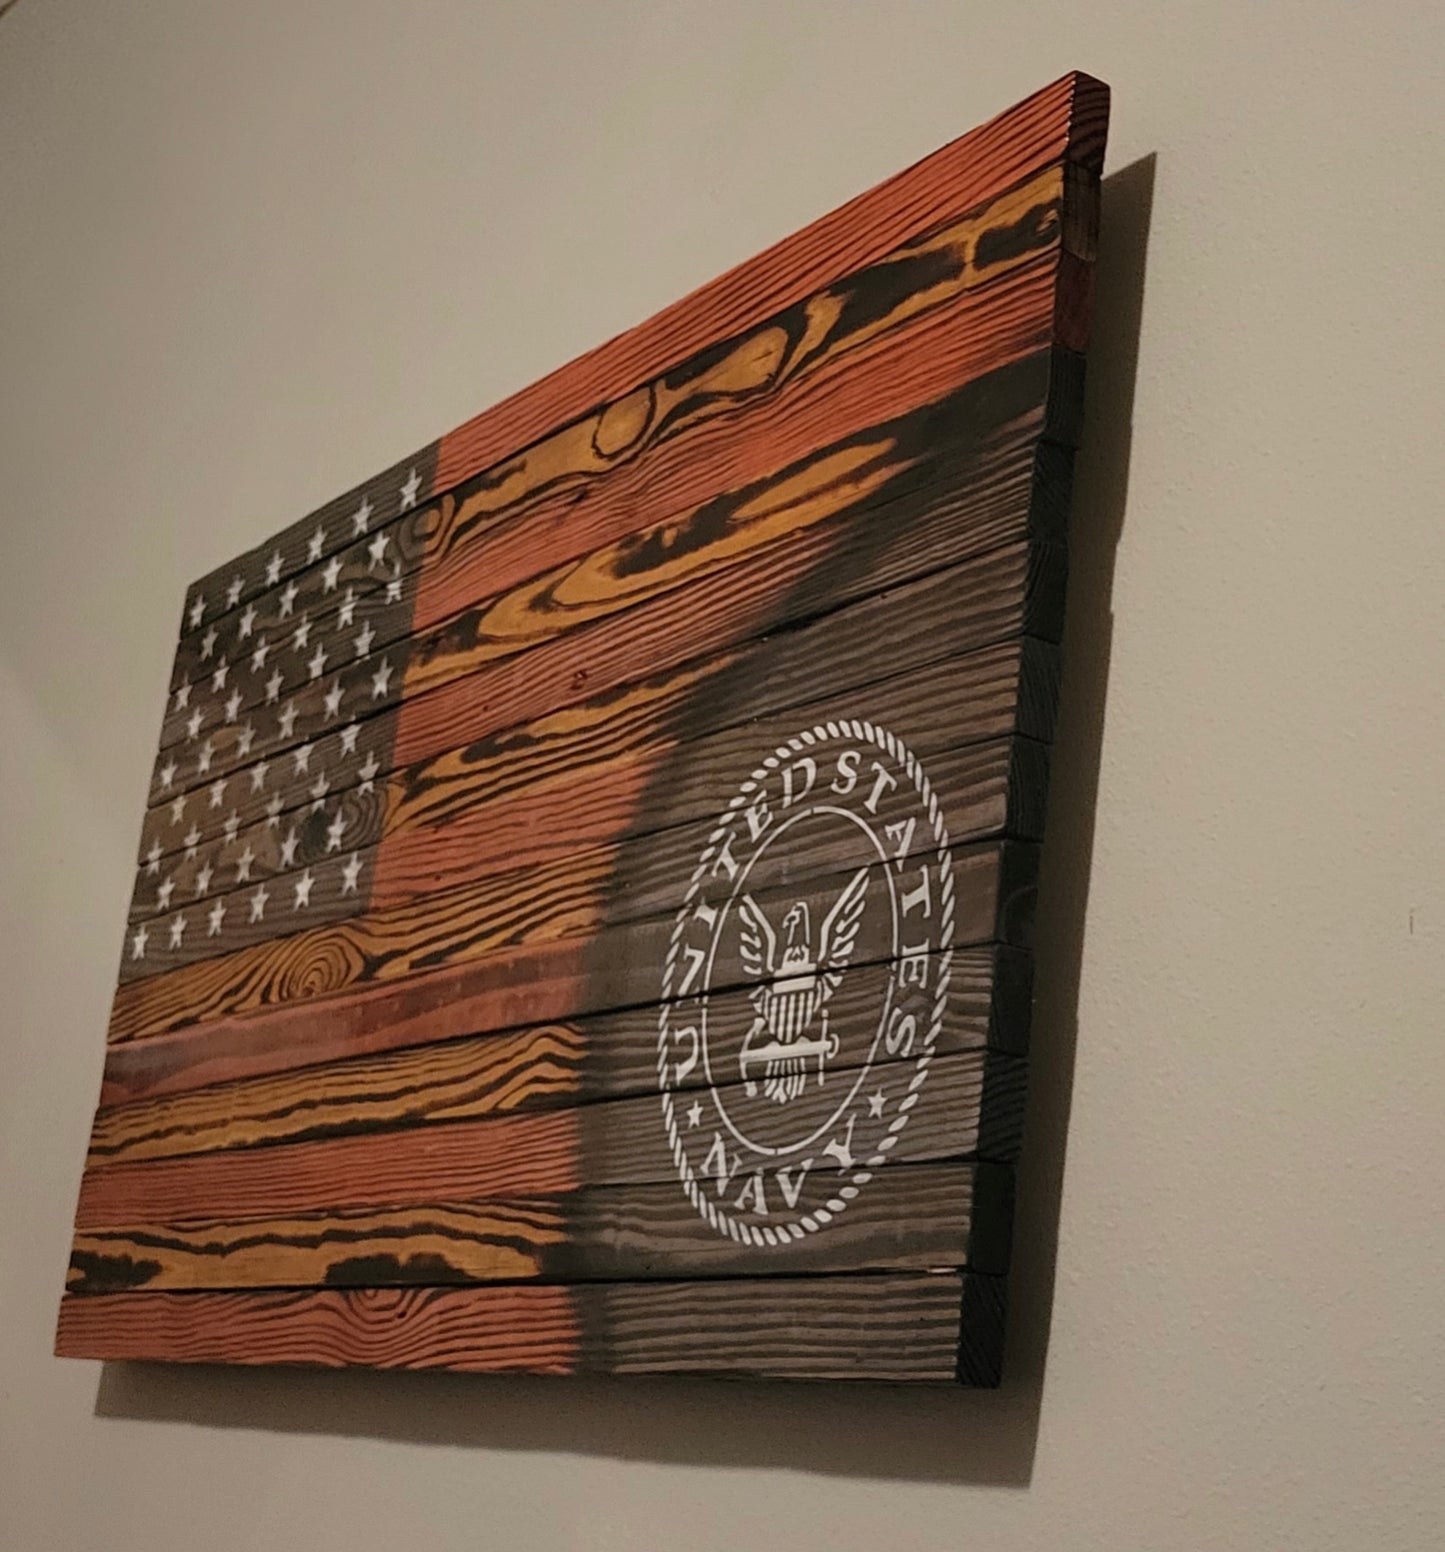 U.S. Navy Wooden American Flag